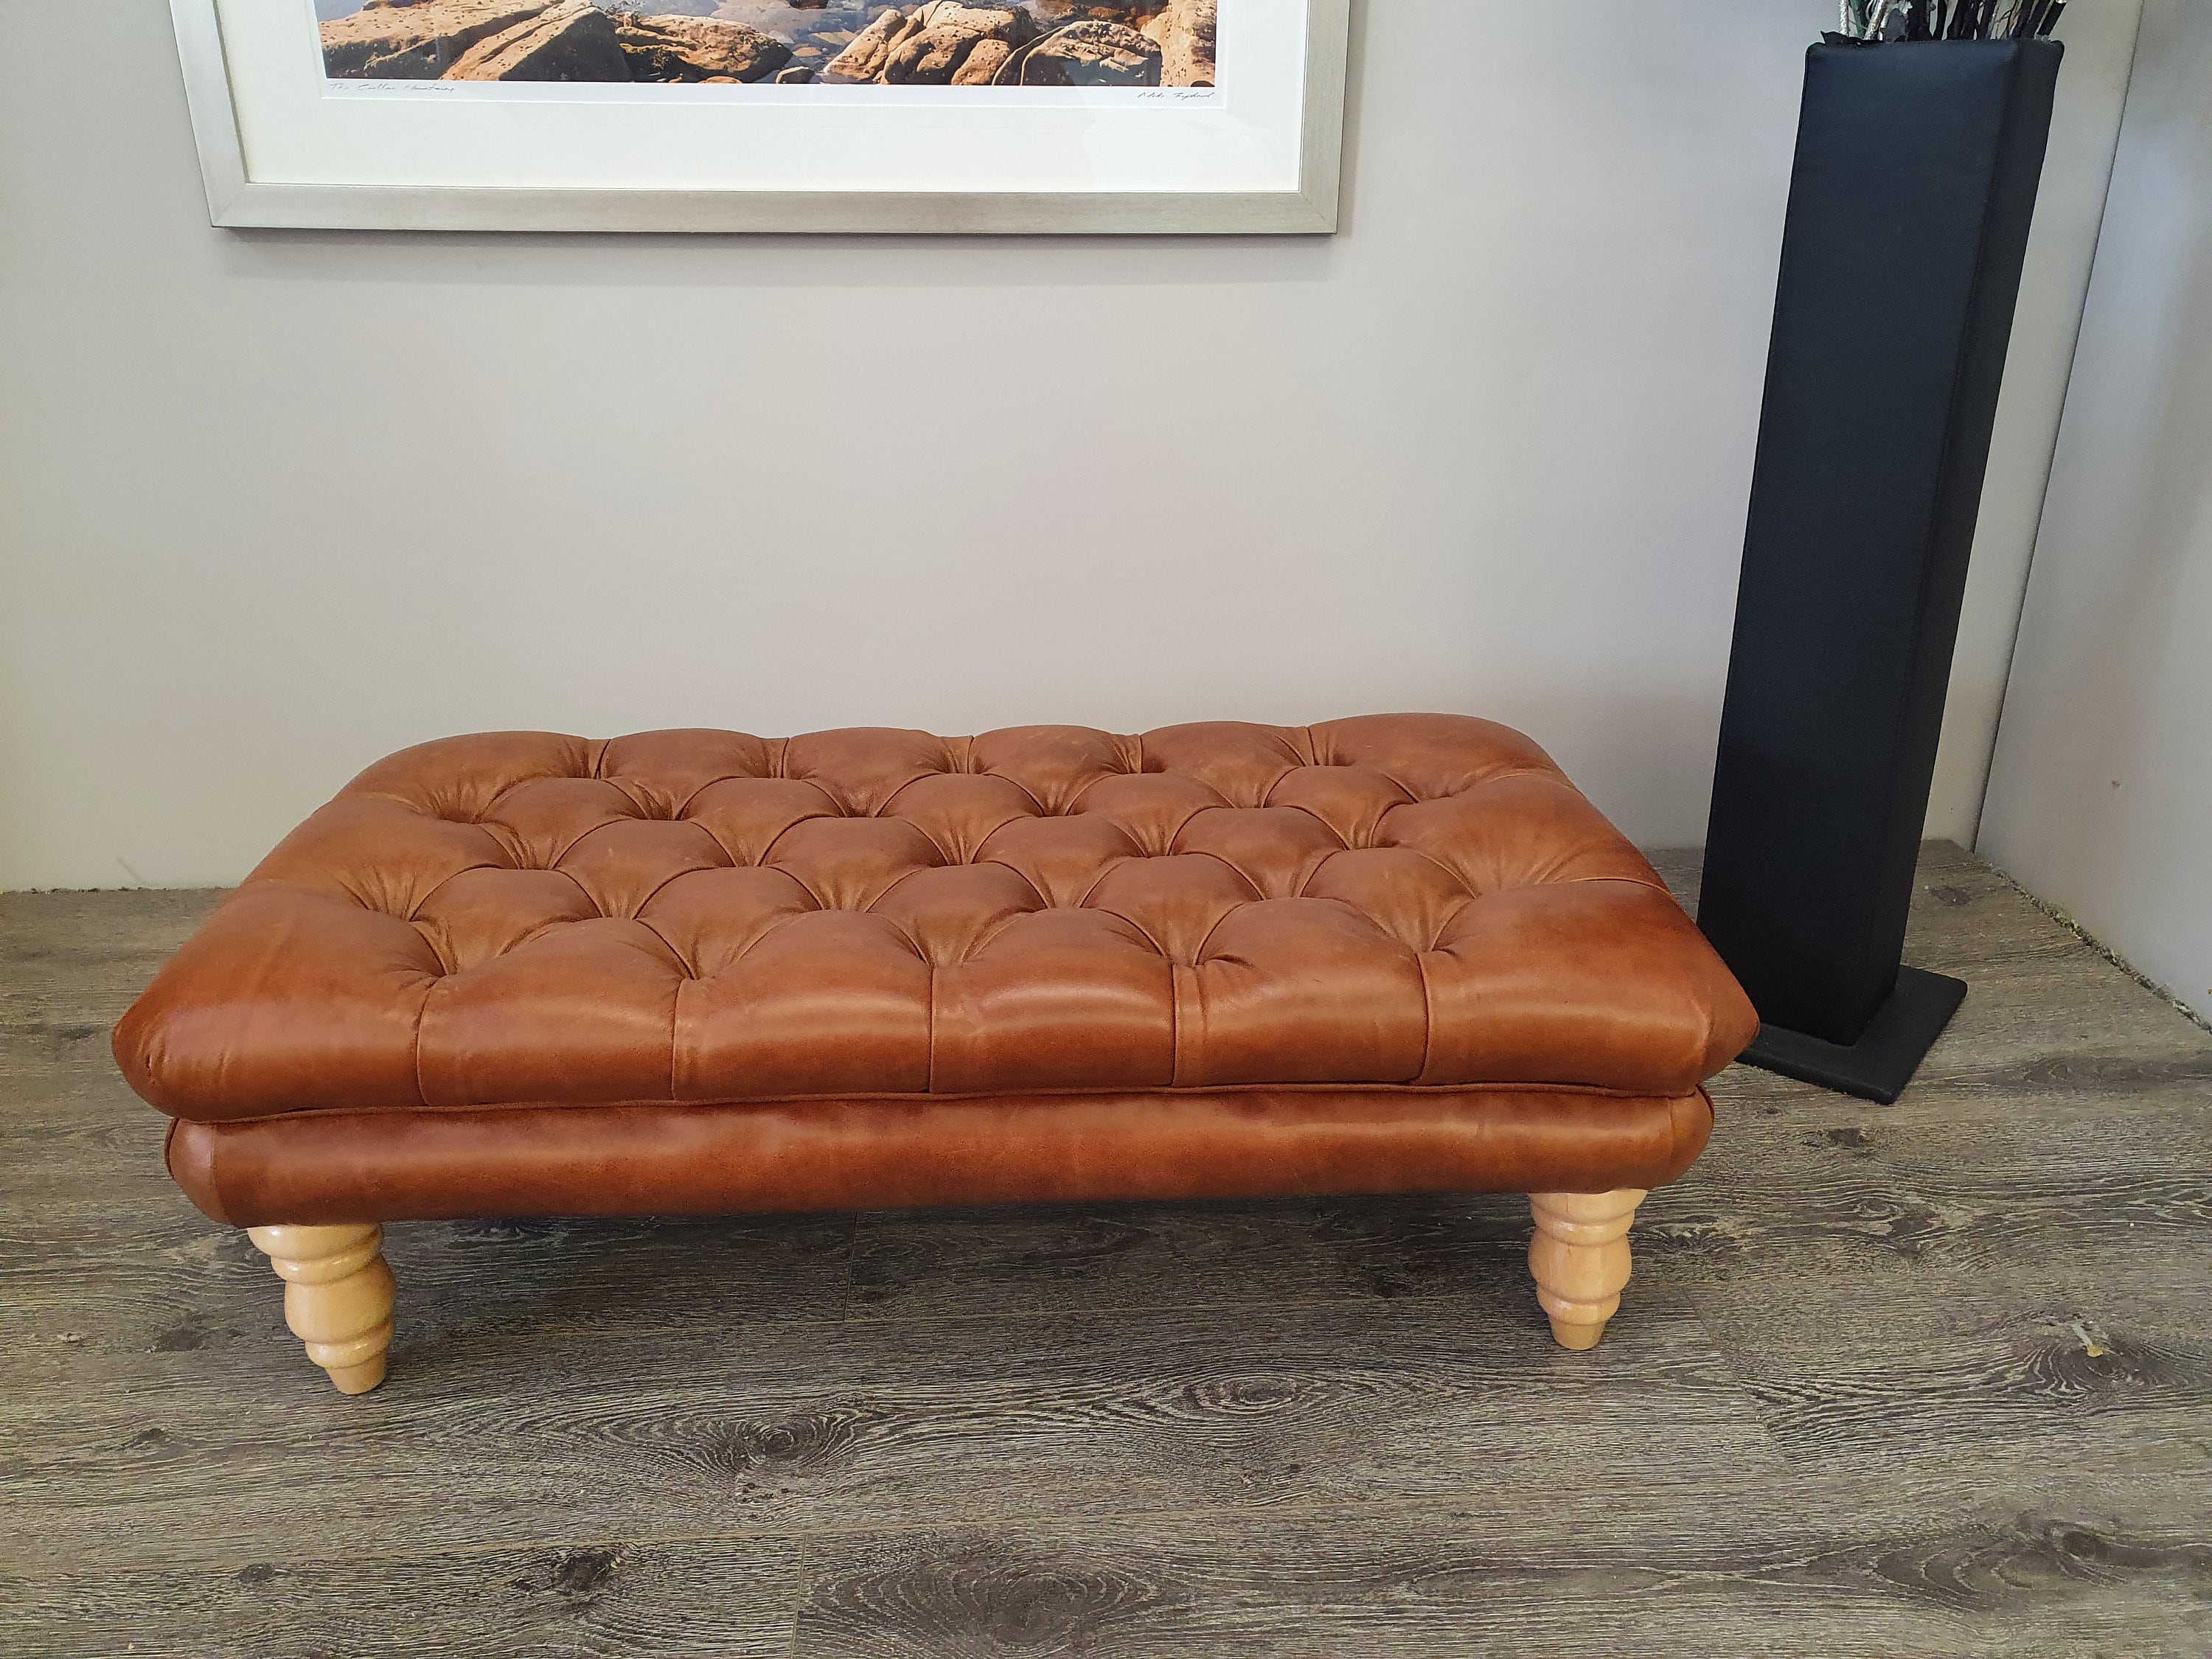 AMANDA BLACK Furniture Genuine Leather Hide Upholstery